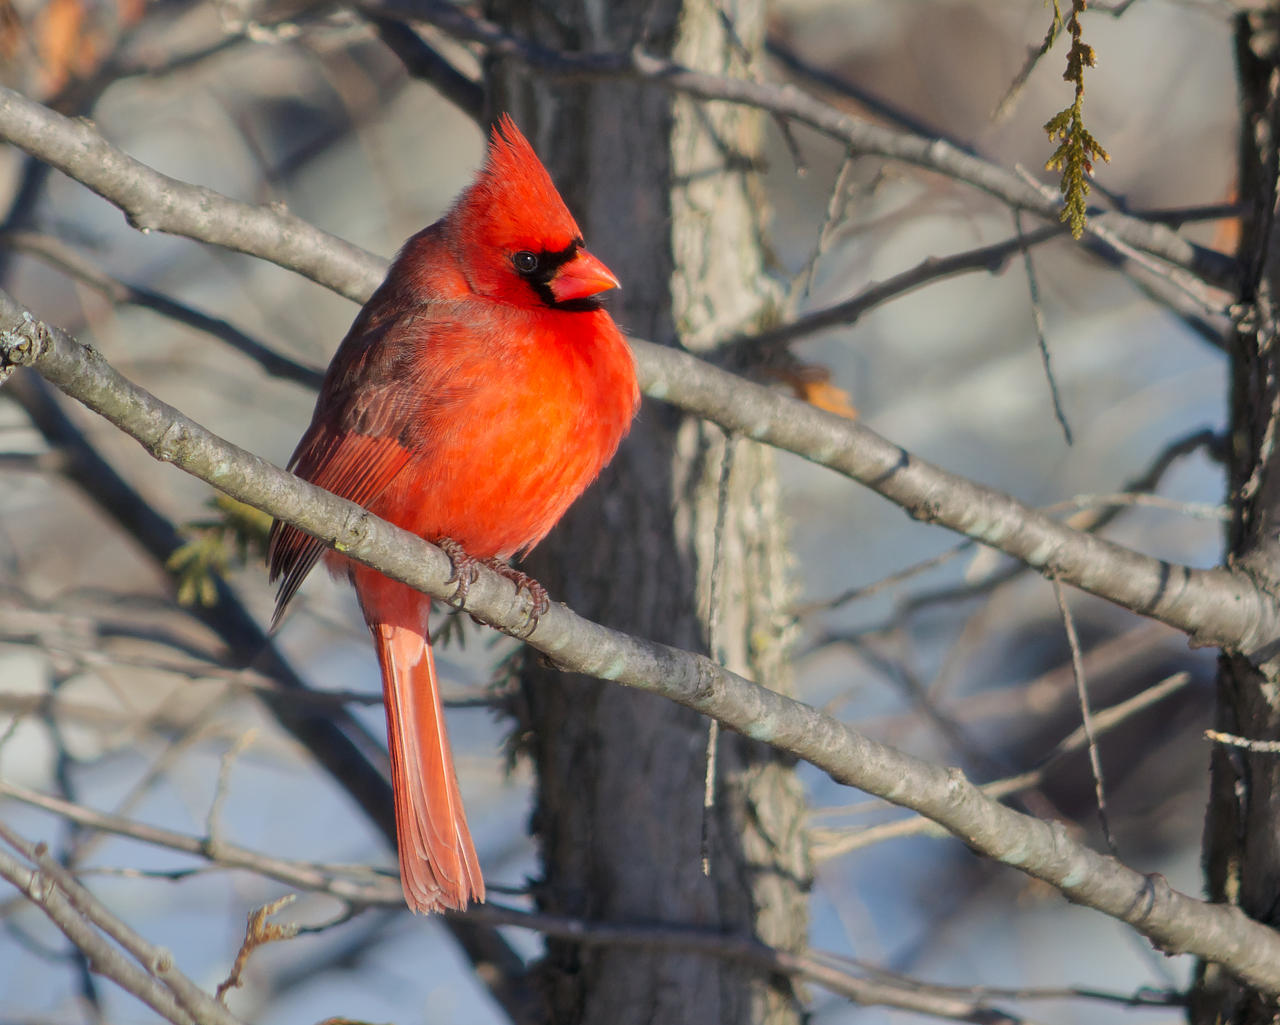 "Creating Cardinal Bird Houses for Biodiversity"